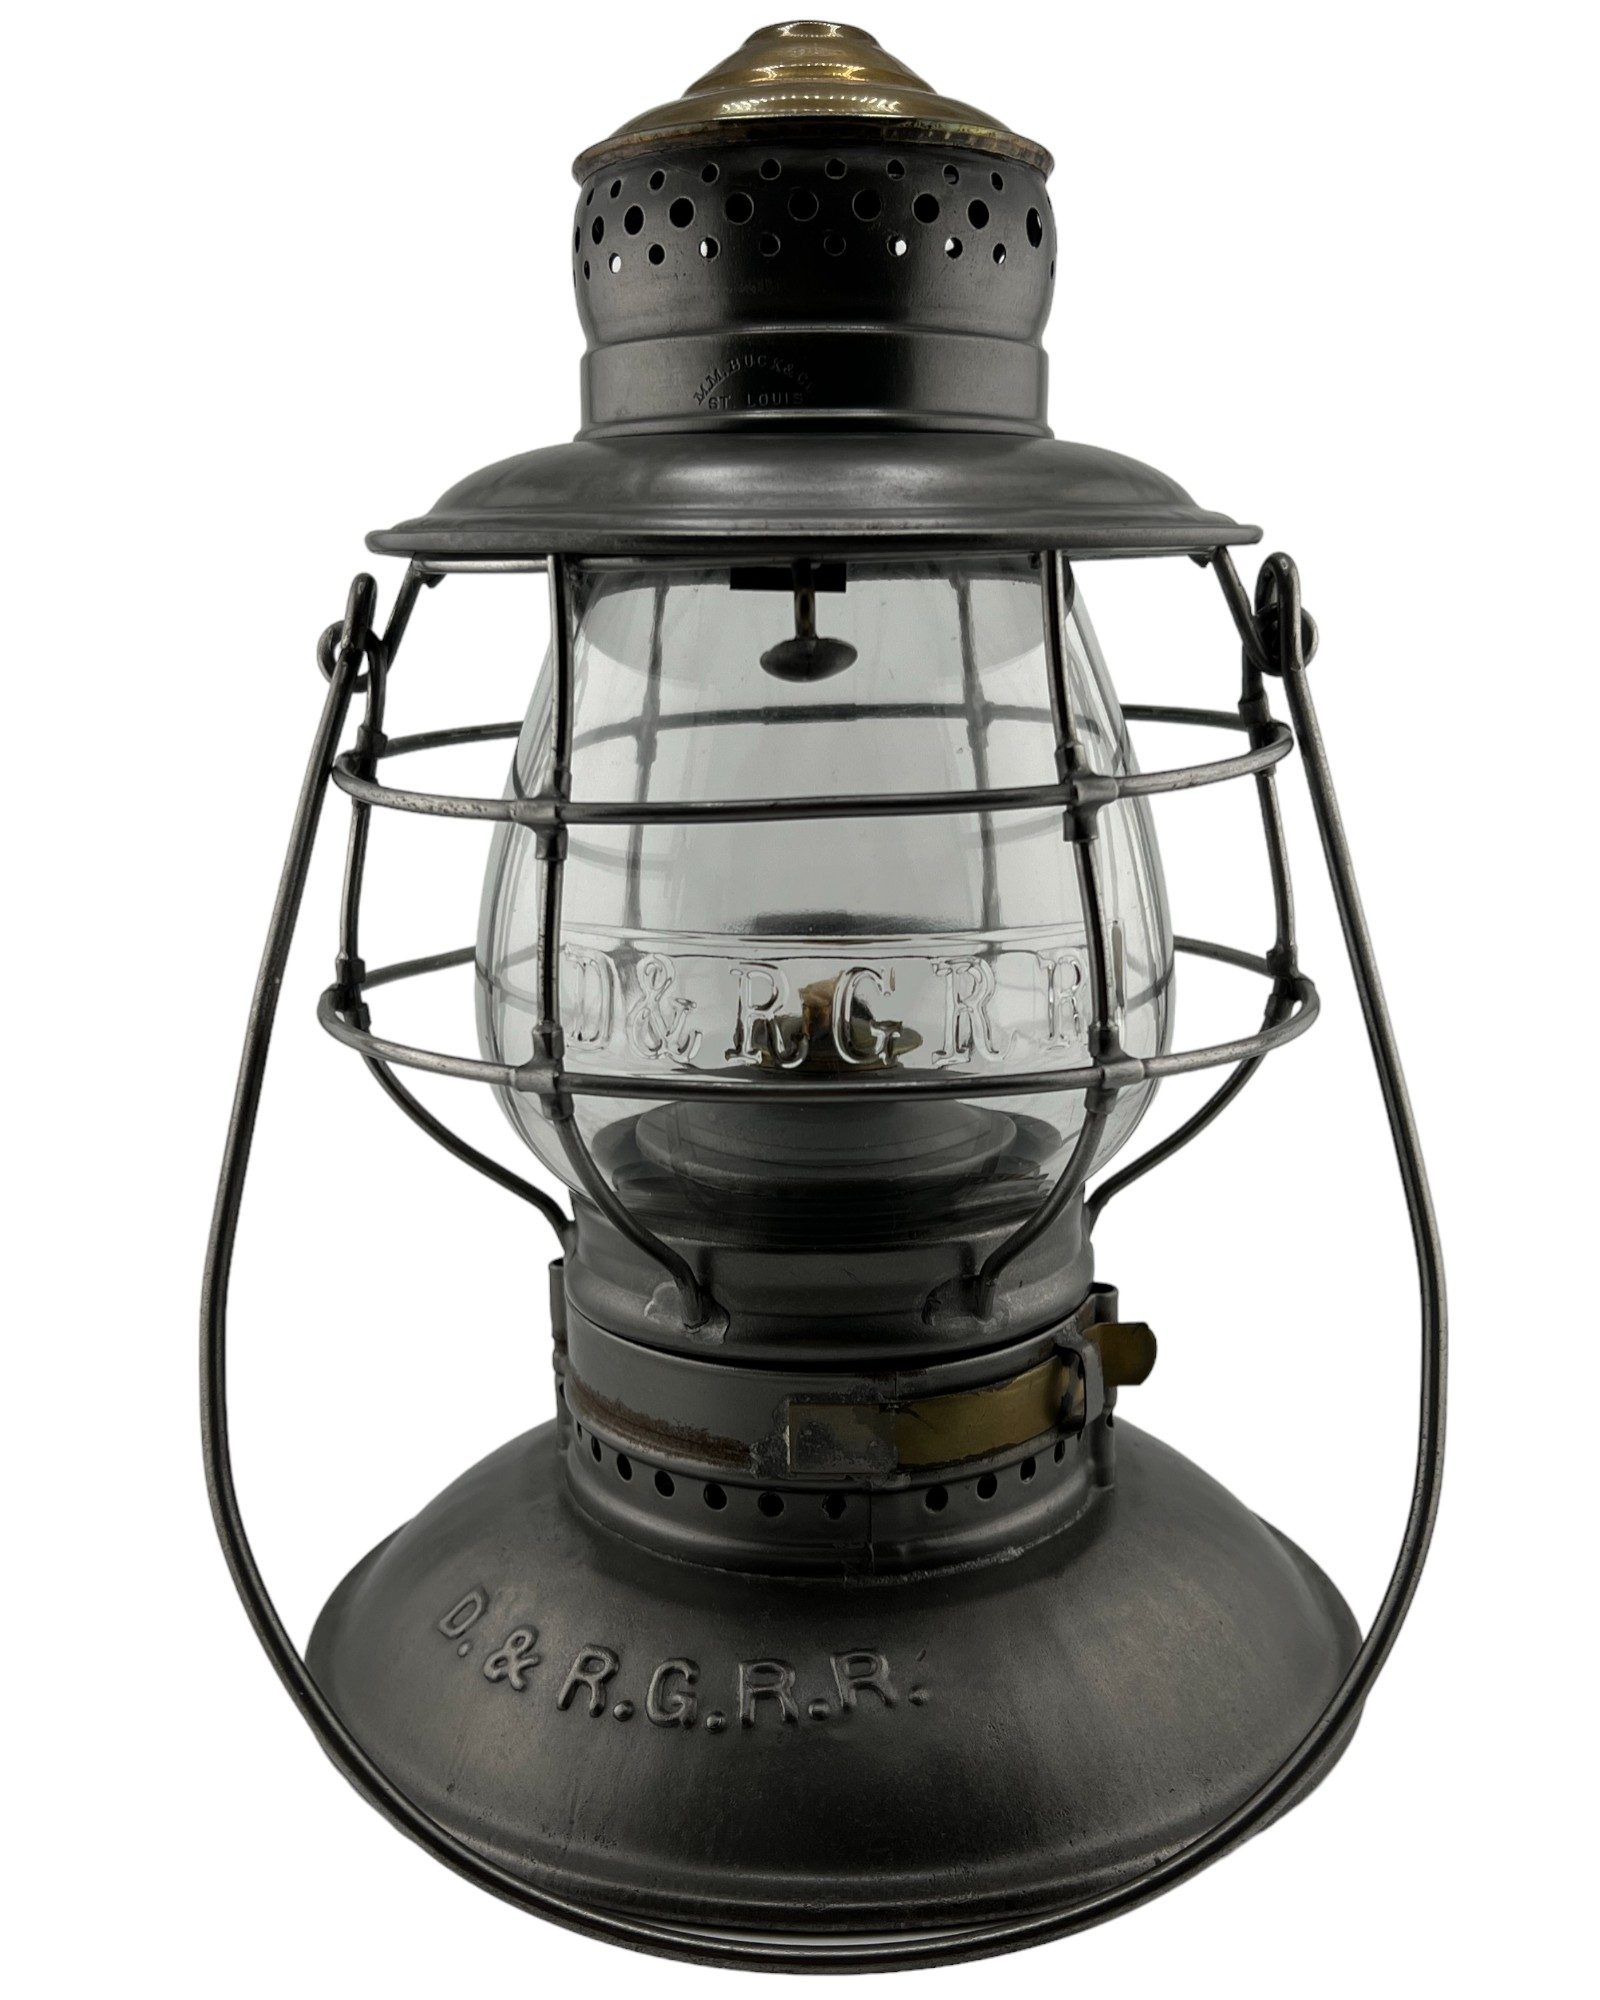 D&RGRR railroad lantern - brass top bell bottom lantern - mm buck